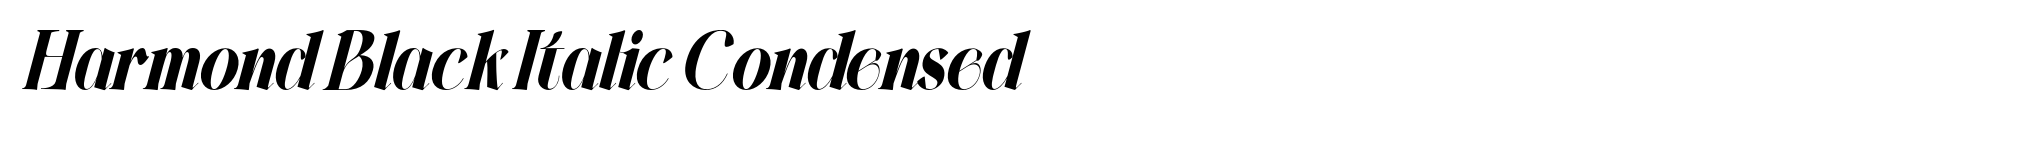 Harmond Black Italic Condensed image